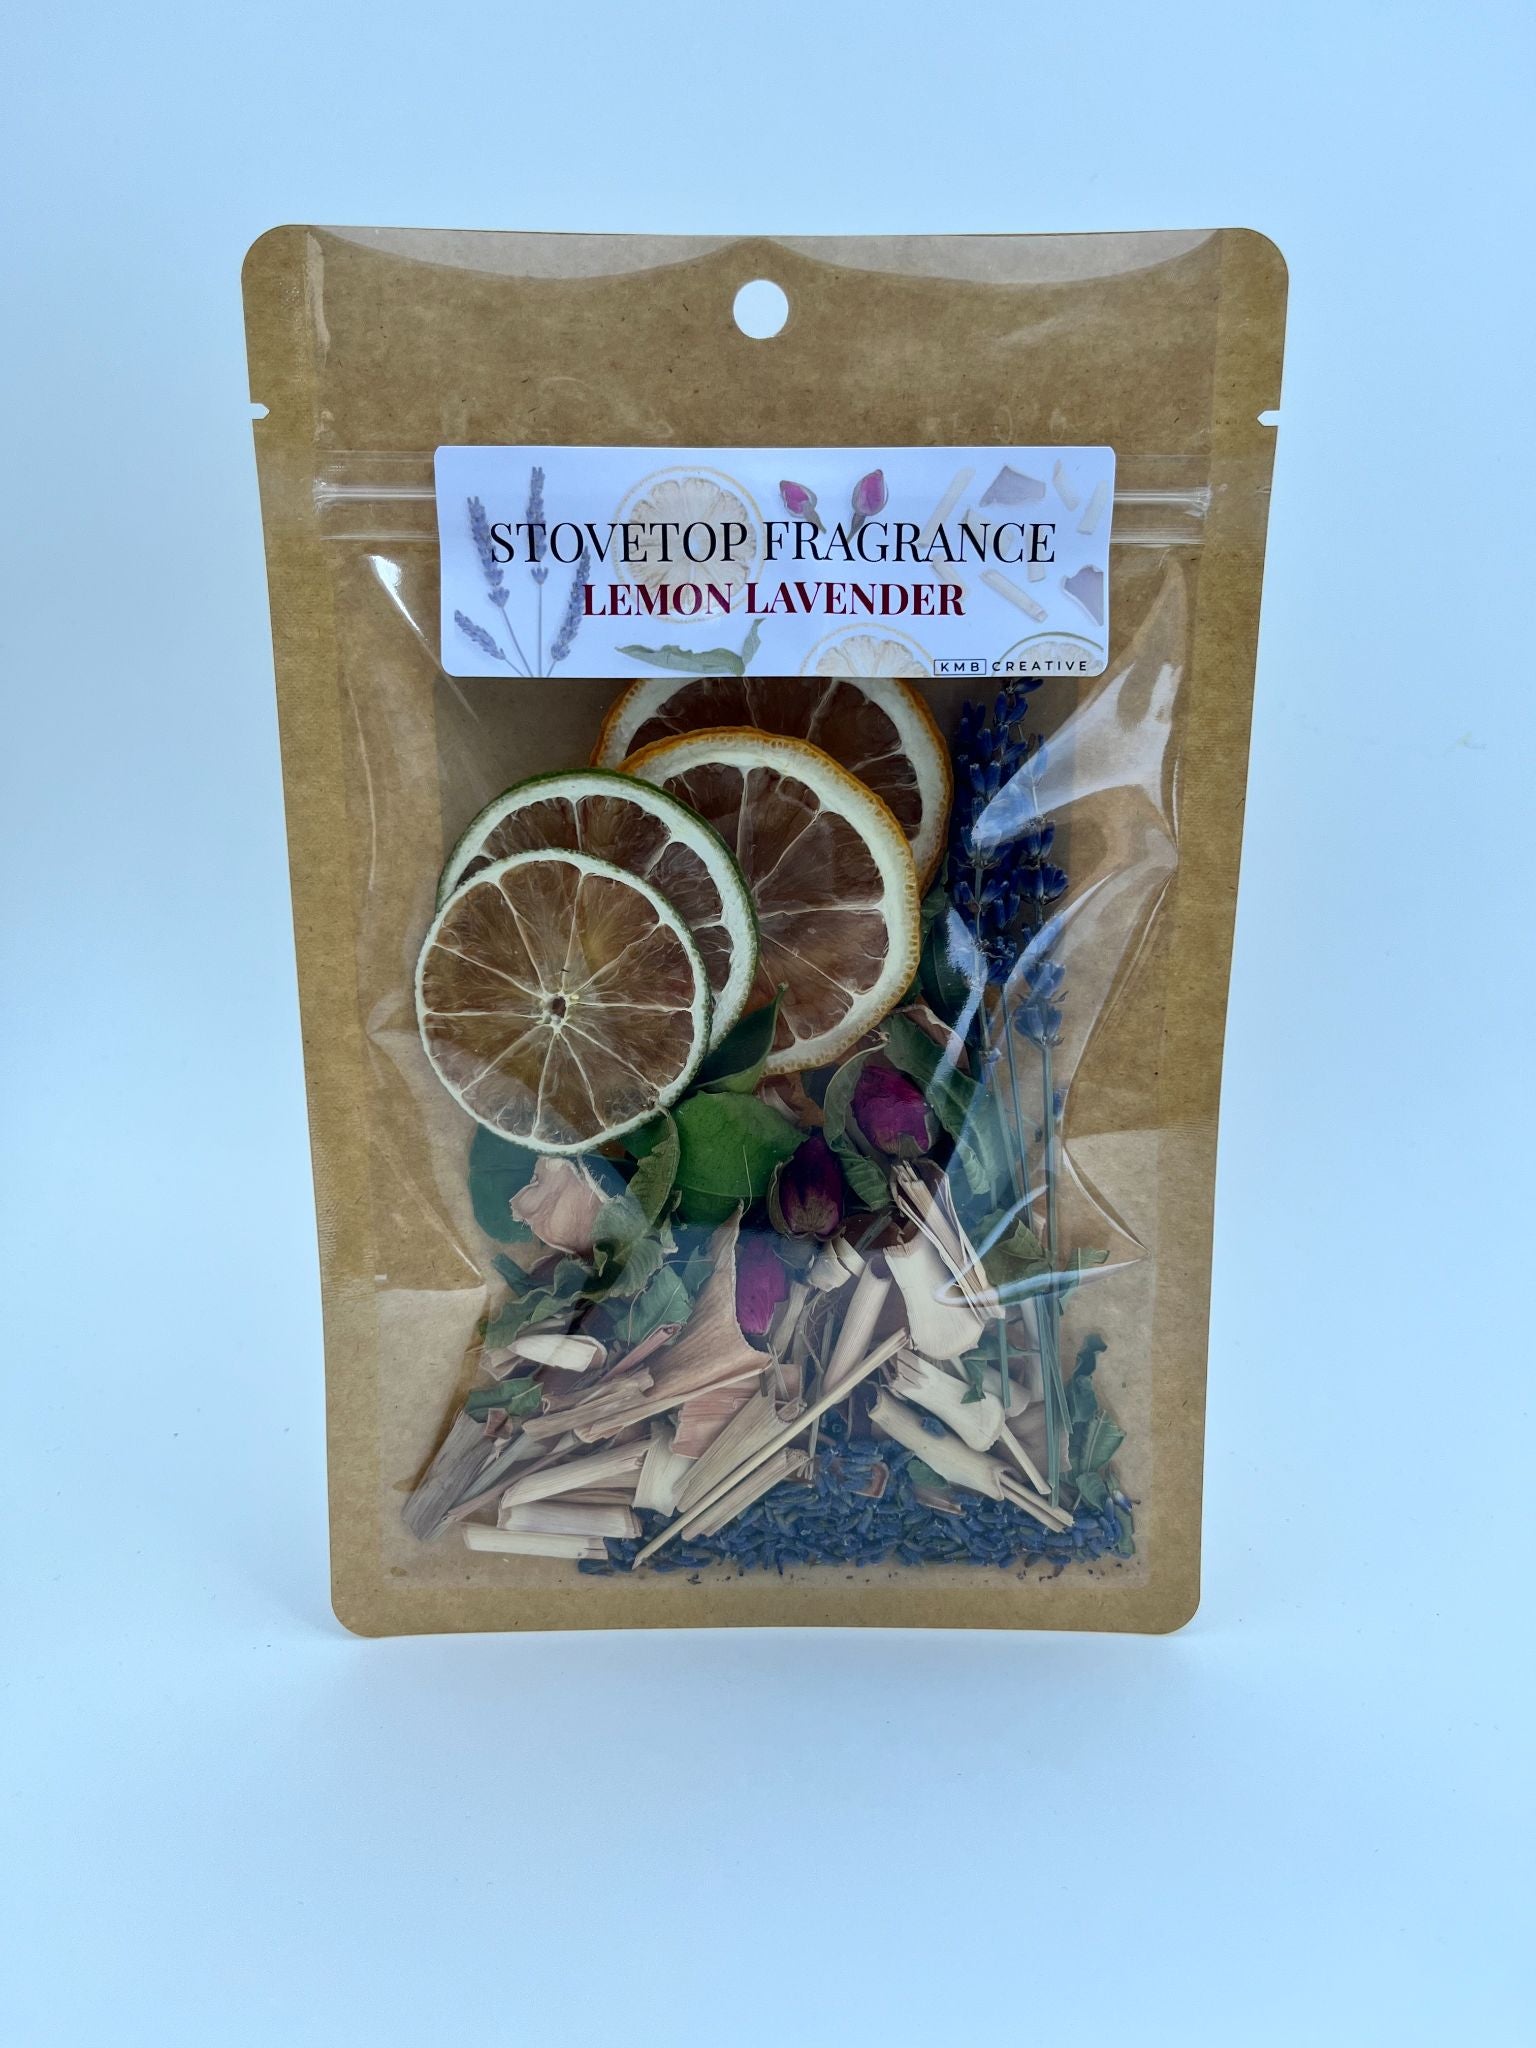 082-001 - Lemon Lavender Stovetop Fragrance - 1